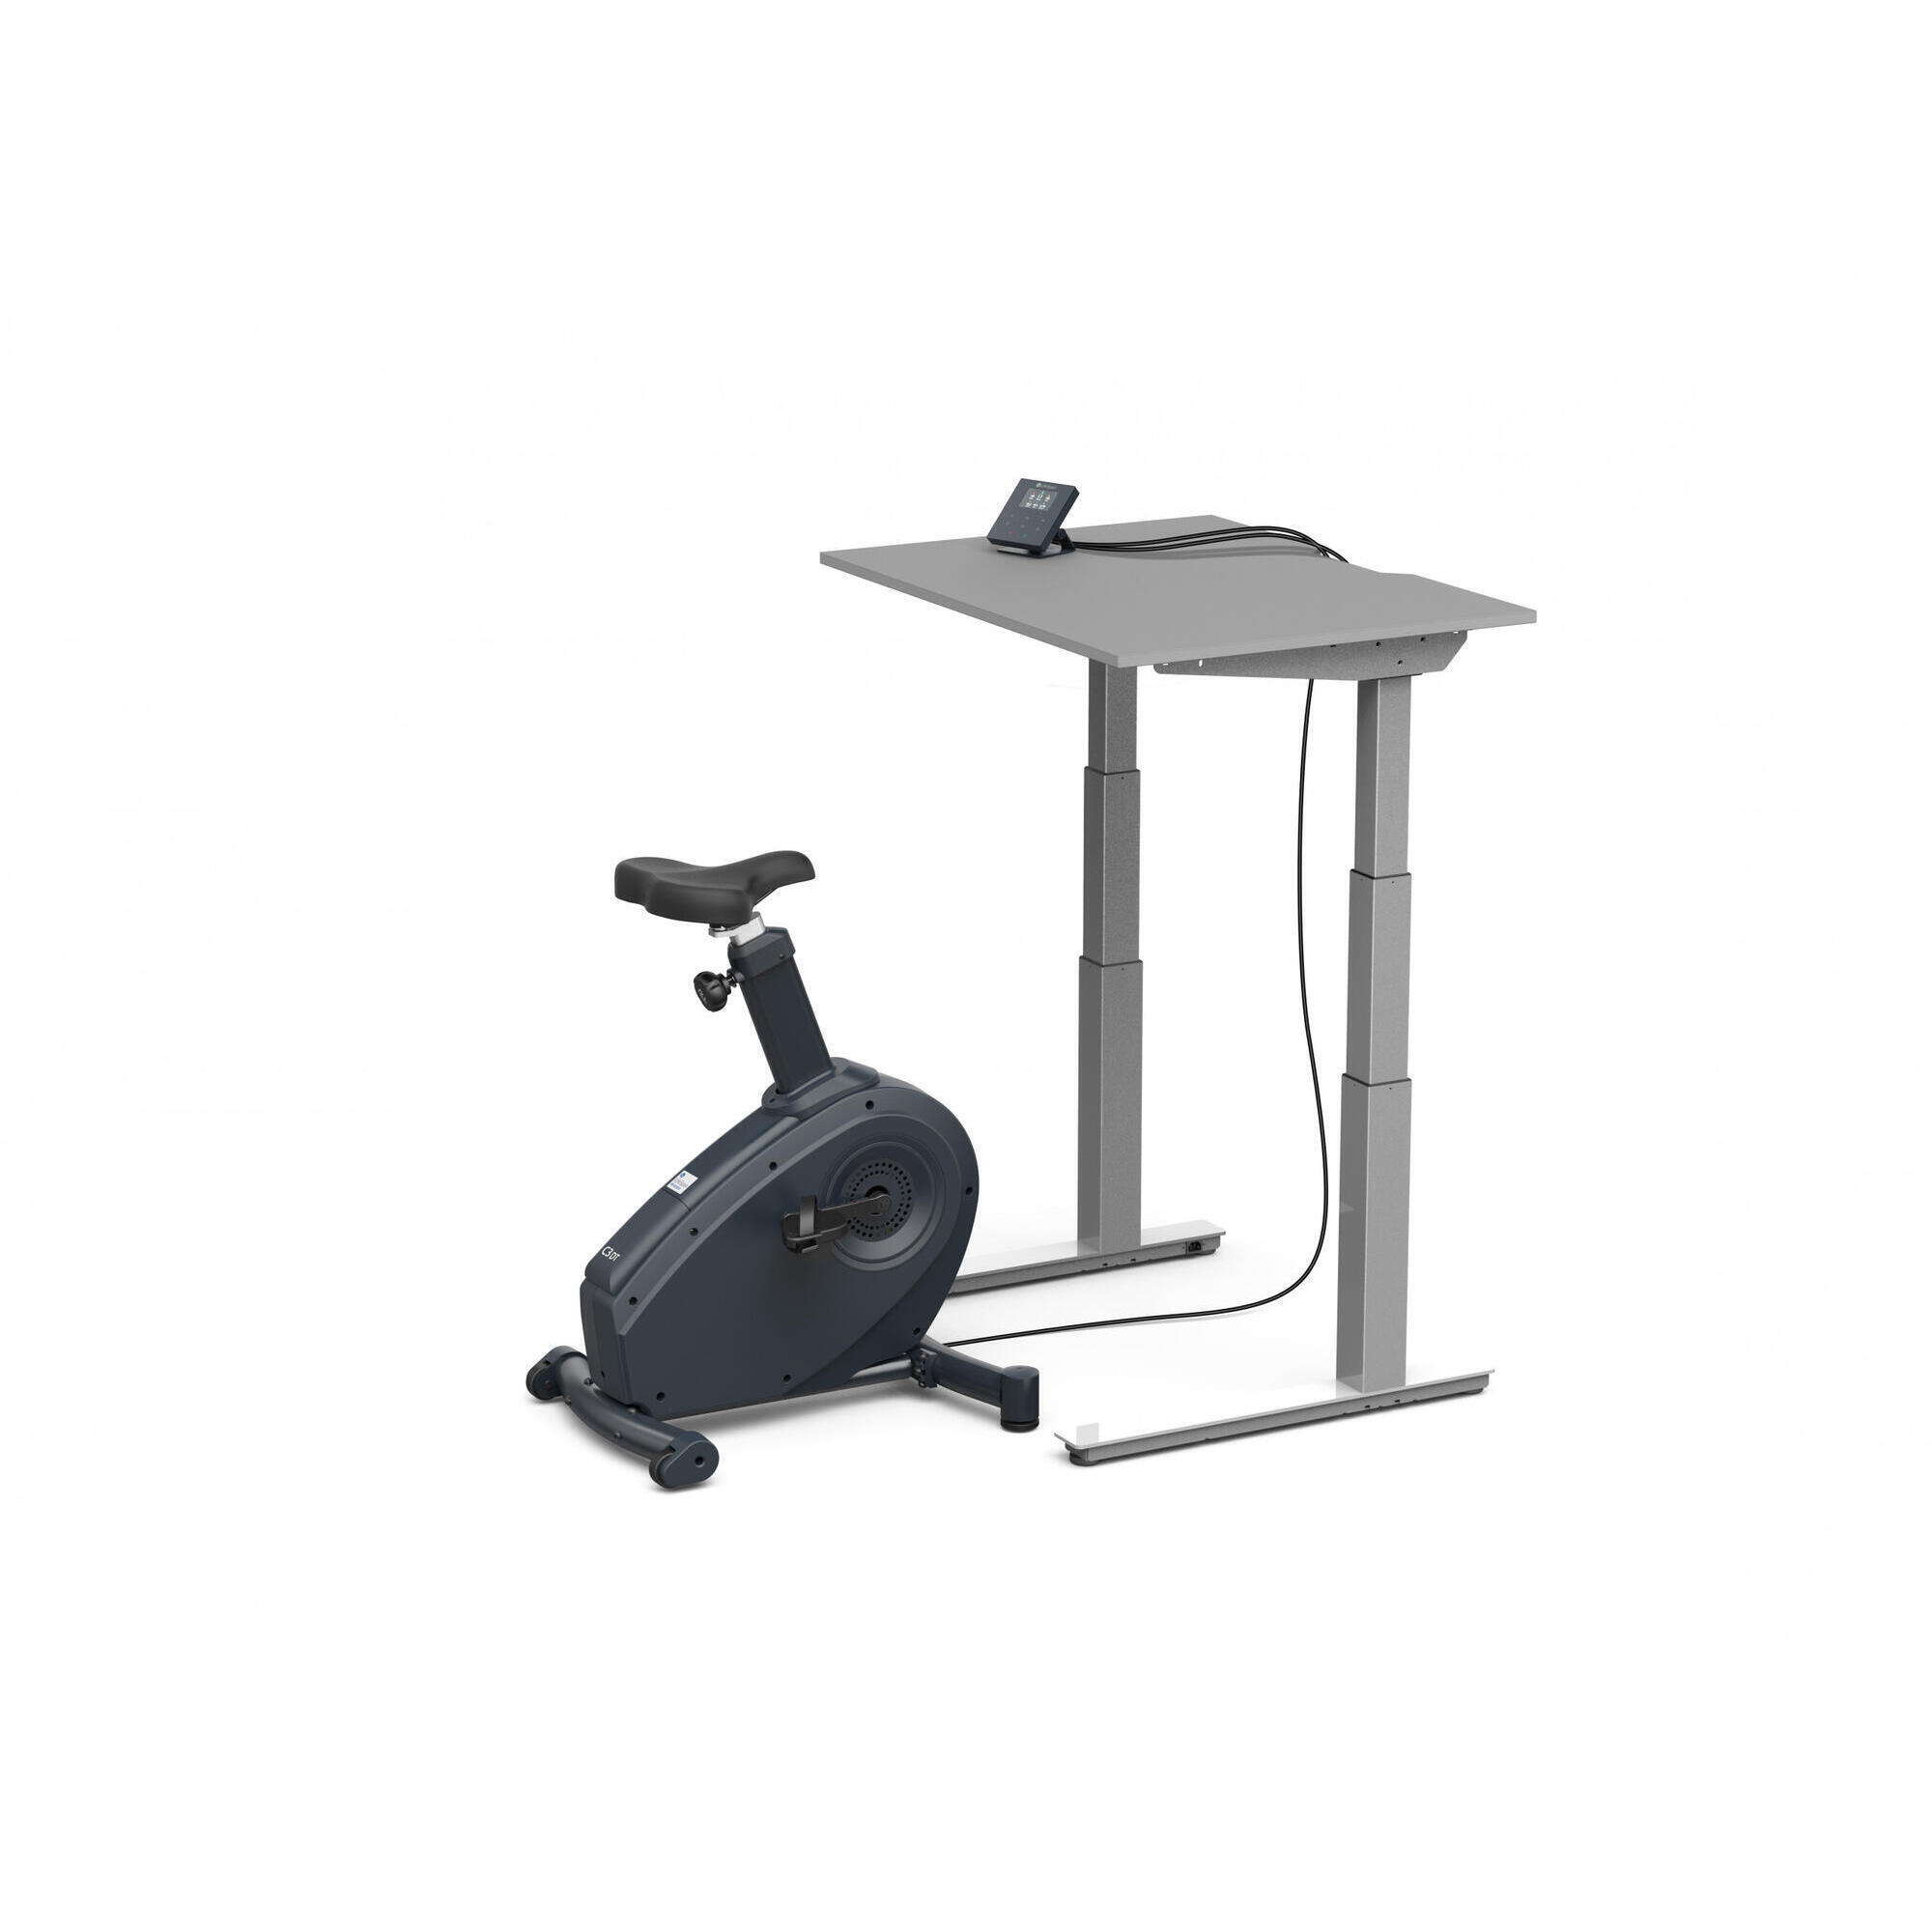 LifeSpan Workplace desk bike with desk C3-DT7+ new model 2022 1/4